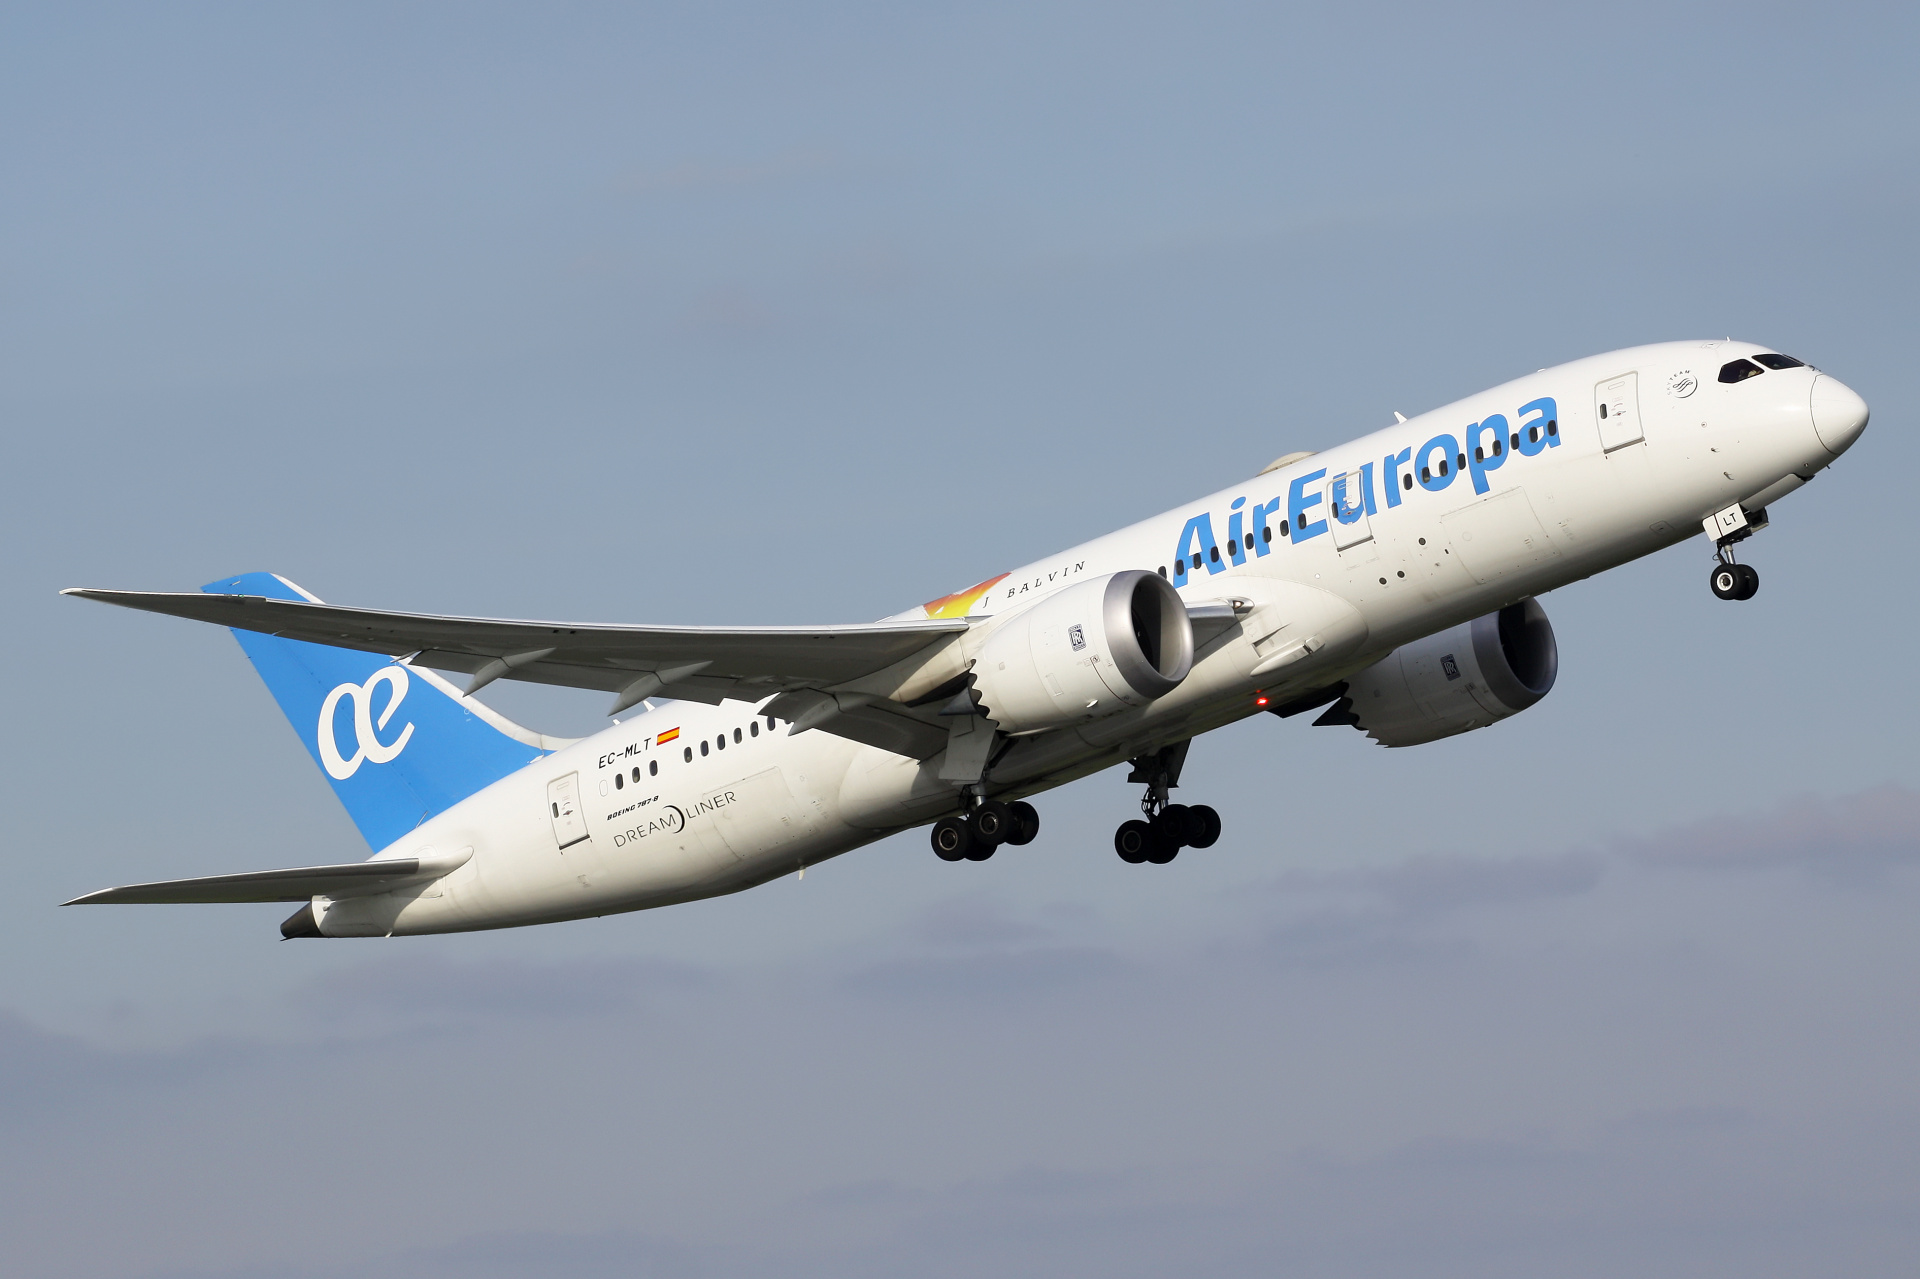 EC-MLT, Air Europa (malowanie Nicky Jam X J. Balvin) (Samoloty » Spotting na EPWA » Boeing 787-8 Dreamliner)